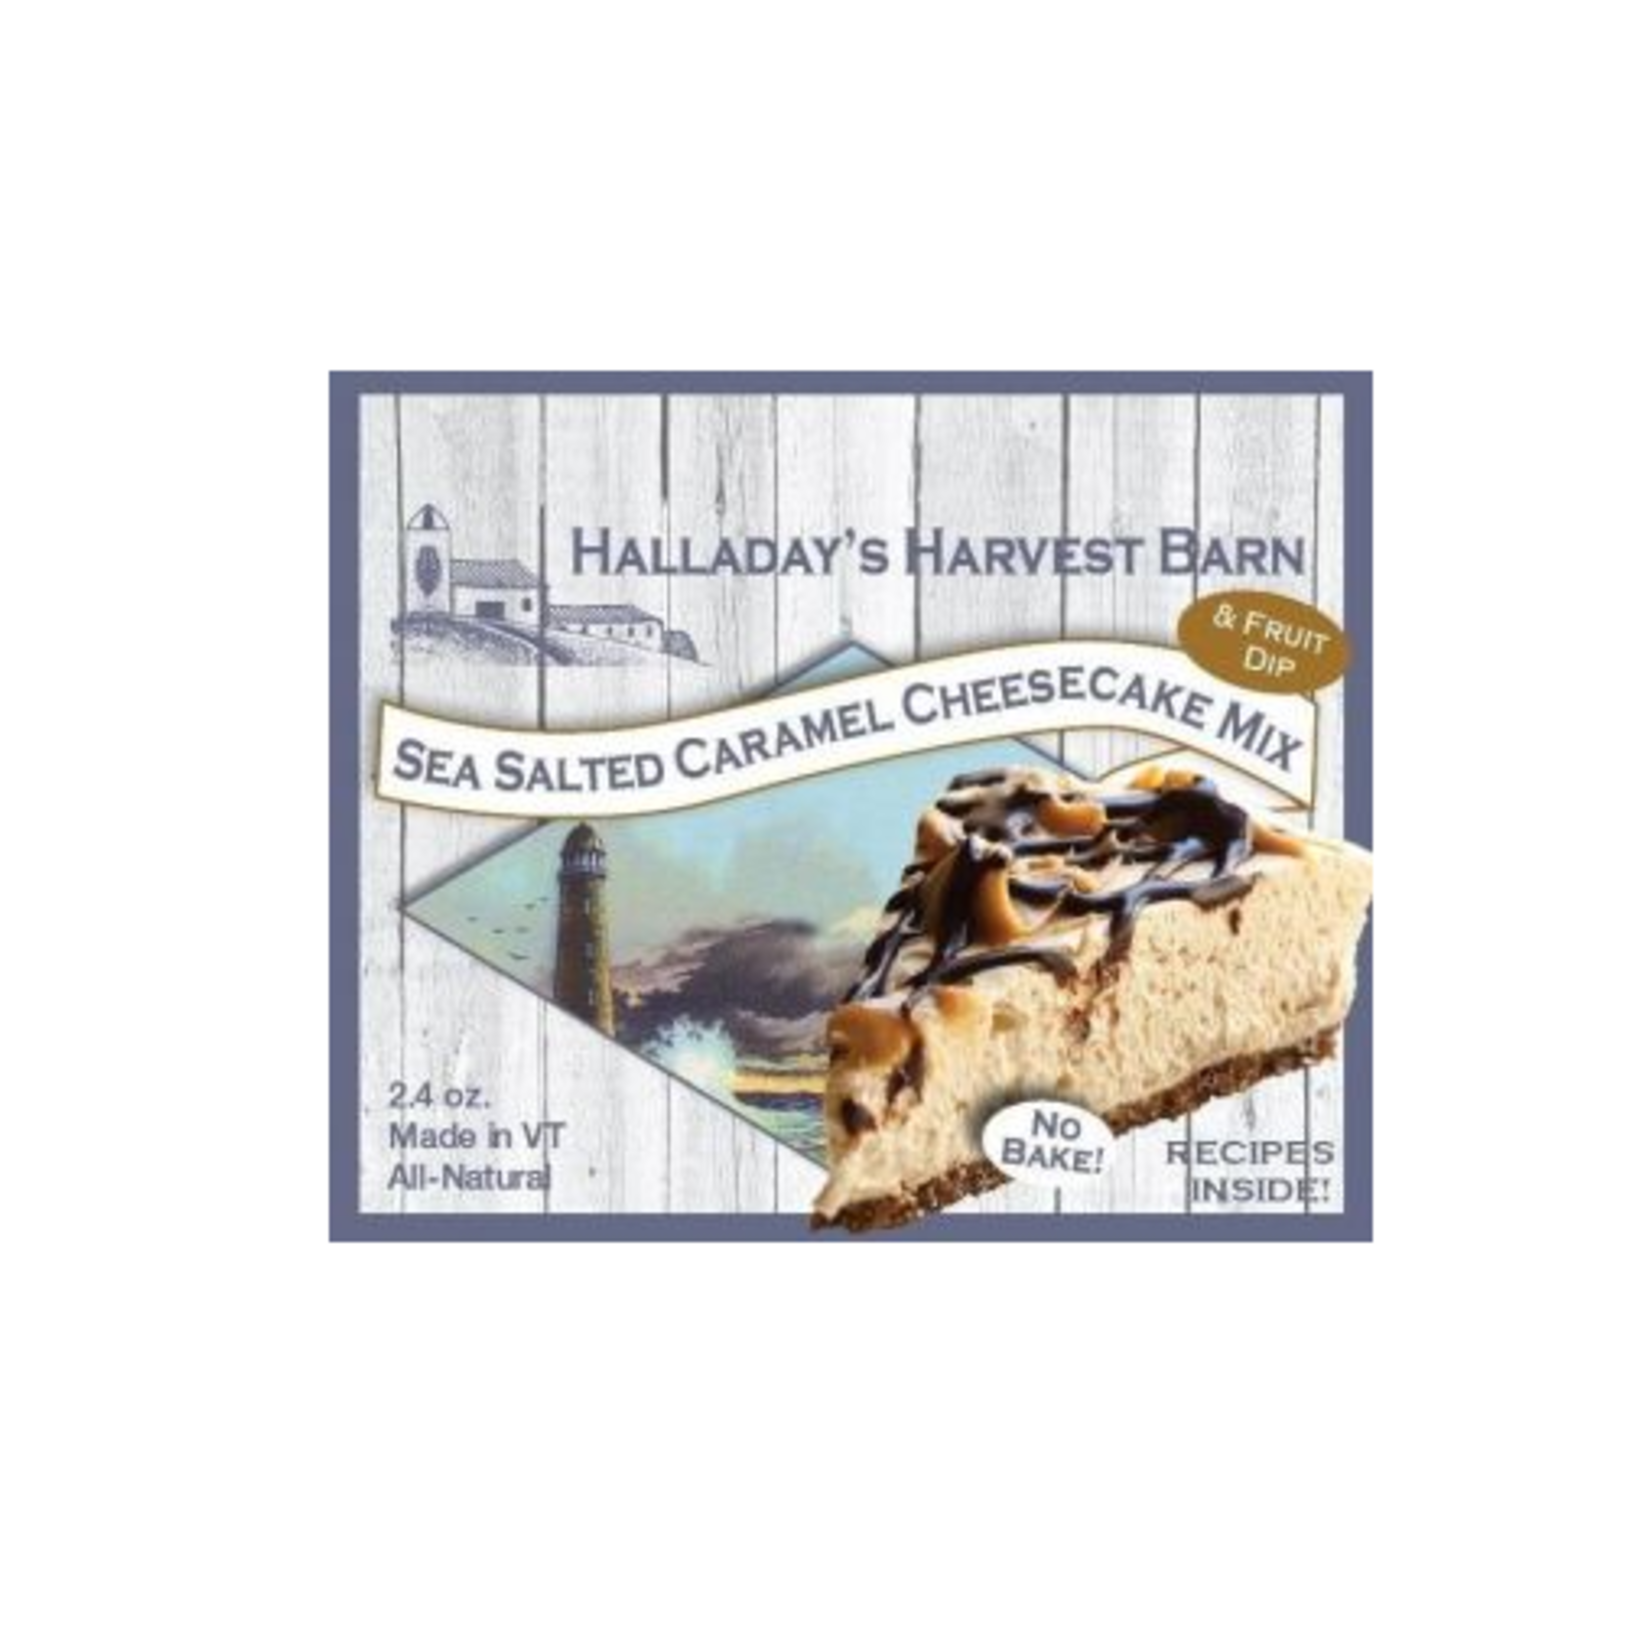 Halladay's Harvest Barn Sea Salted Caramel Cheesecake Mix